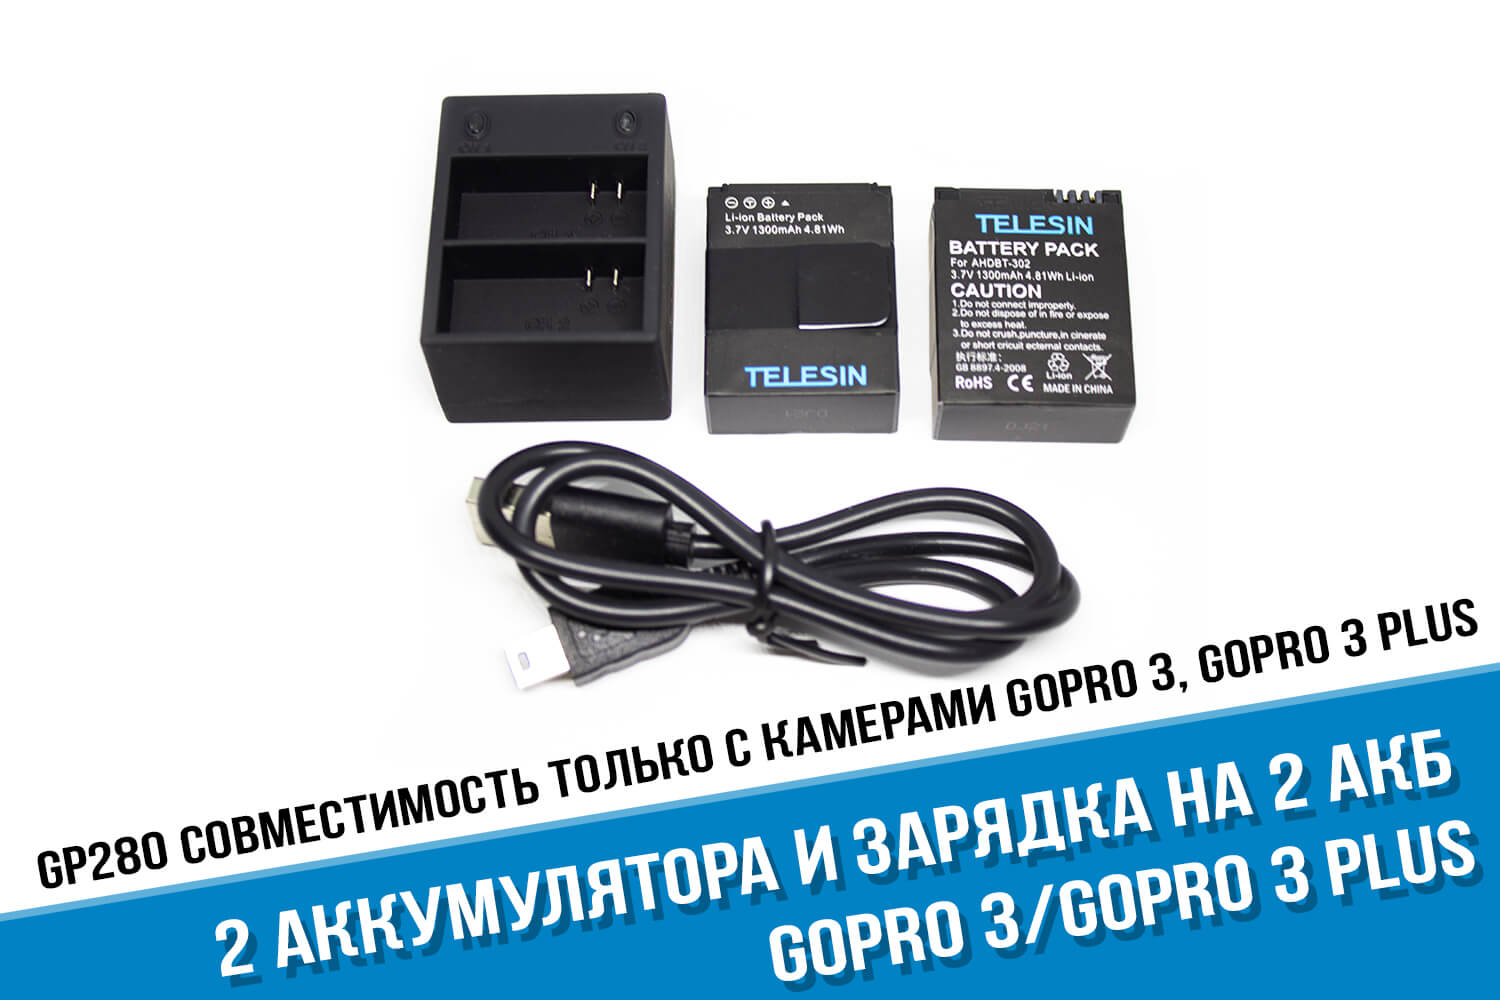 Зарядное устройство GoPro Hero 3 с двумя аккумуляторами для GoPro 3 фирмы Telesin